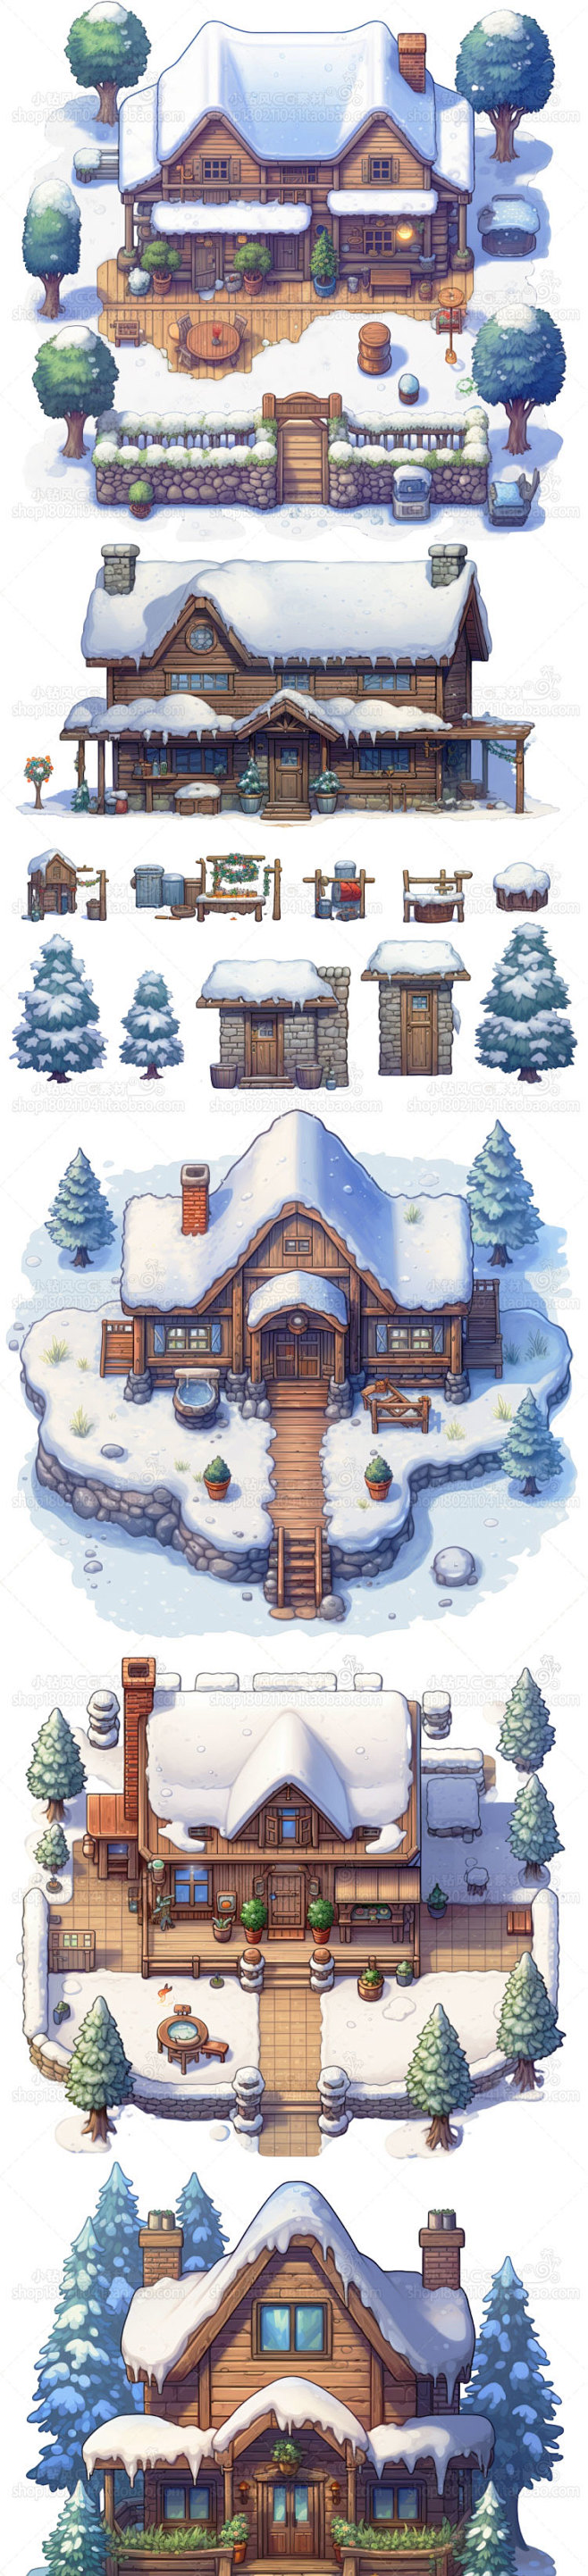 Q版卡通雪景素材 游戏场景雪地房屋建筑树...